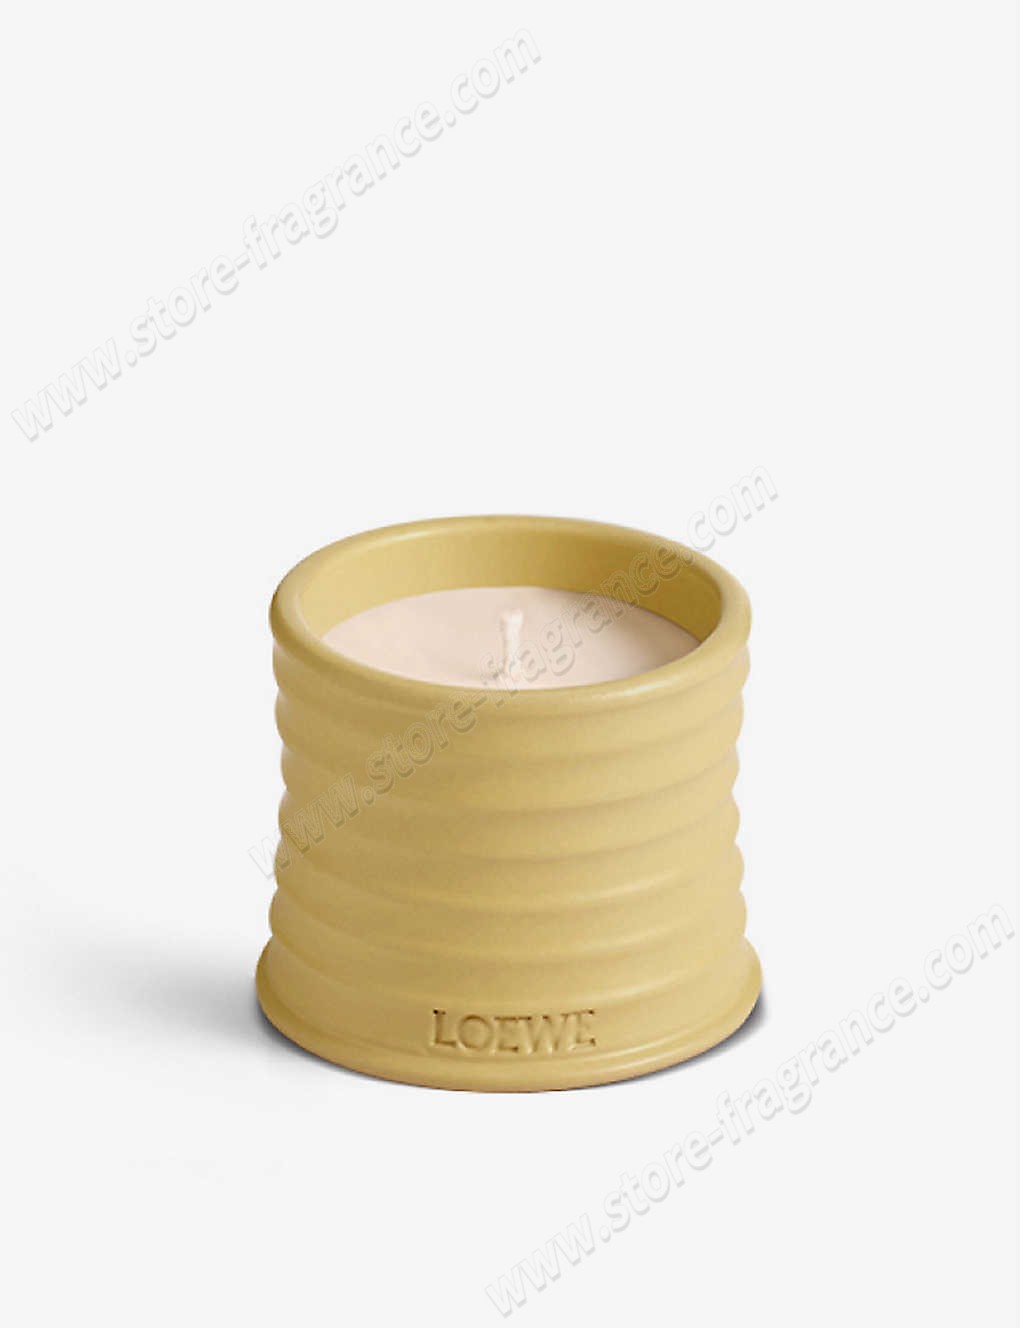 LOEWE/Honeysuckle scented candle 170g ✿ Discount Store - LOEWE/Honeysuckle scented candle 170g ✿ Discount Store